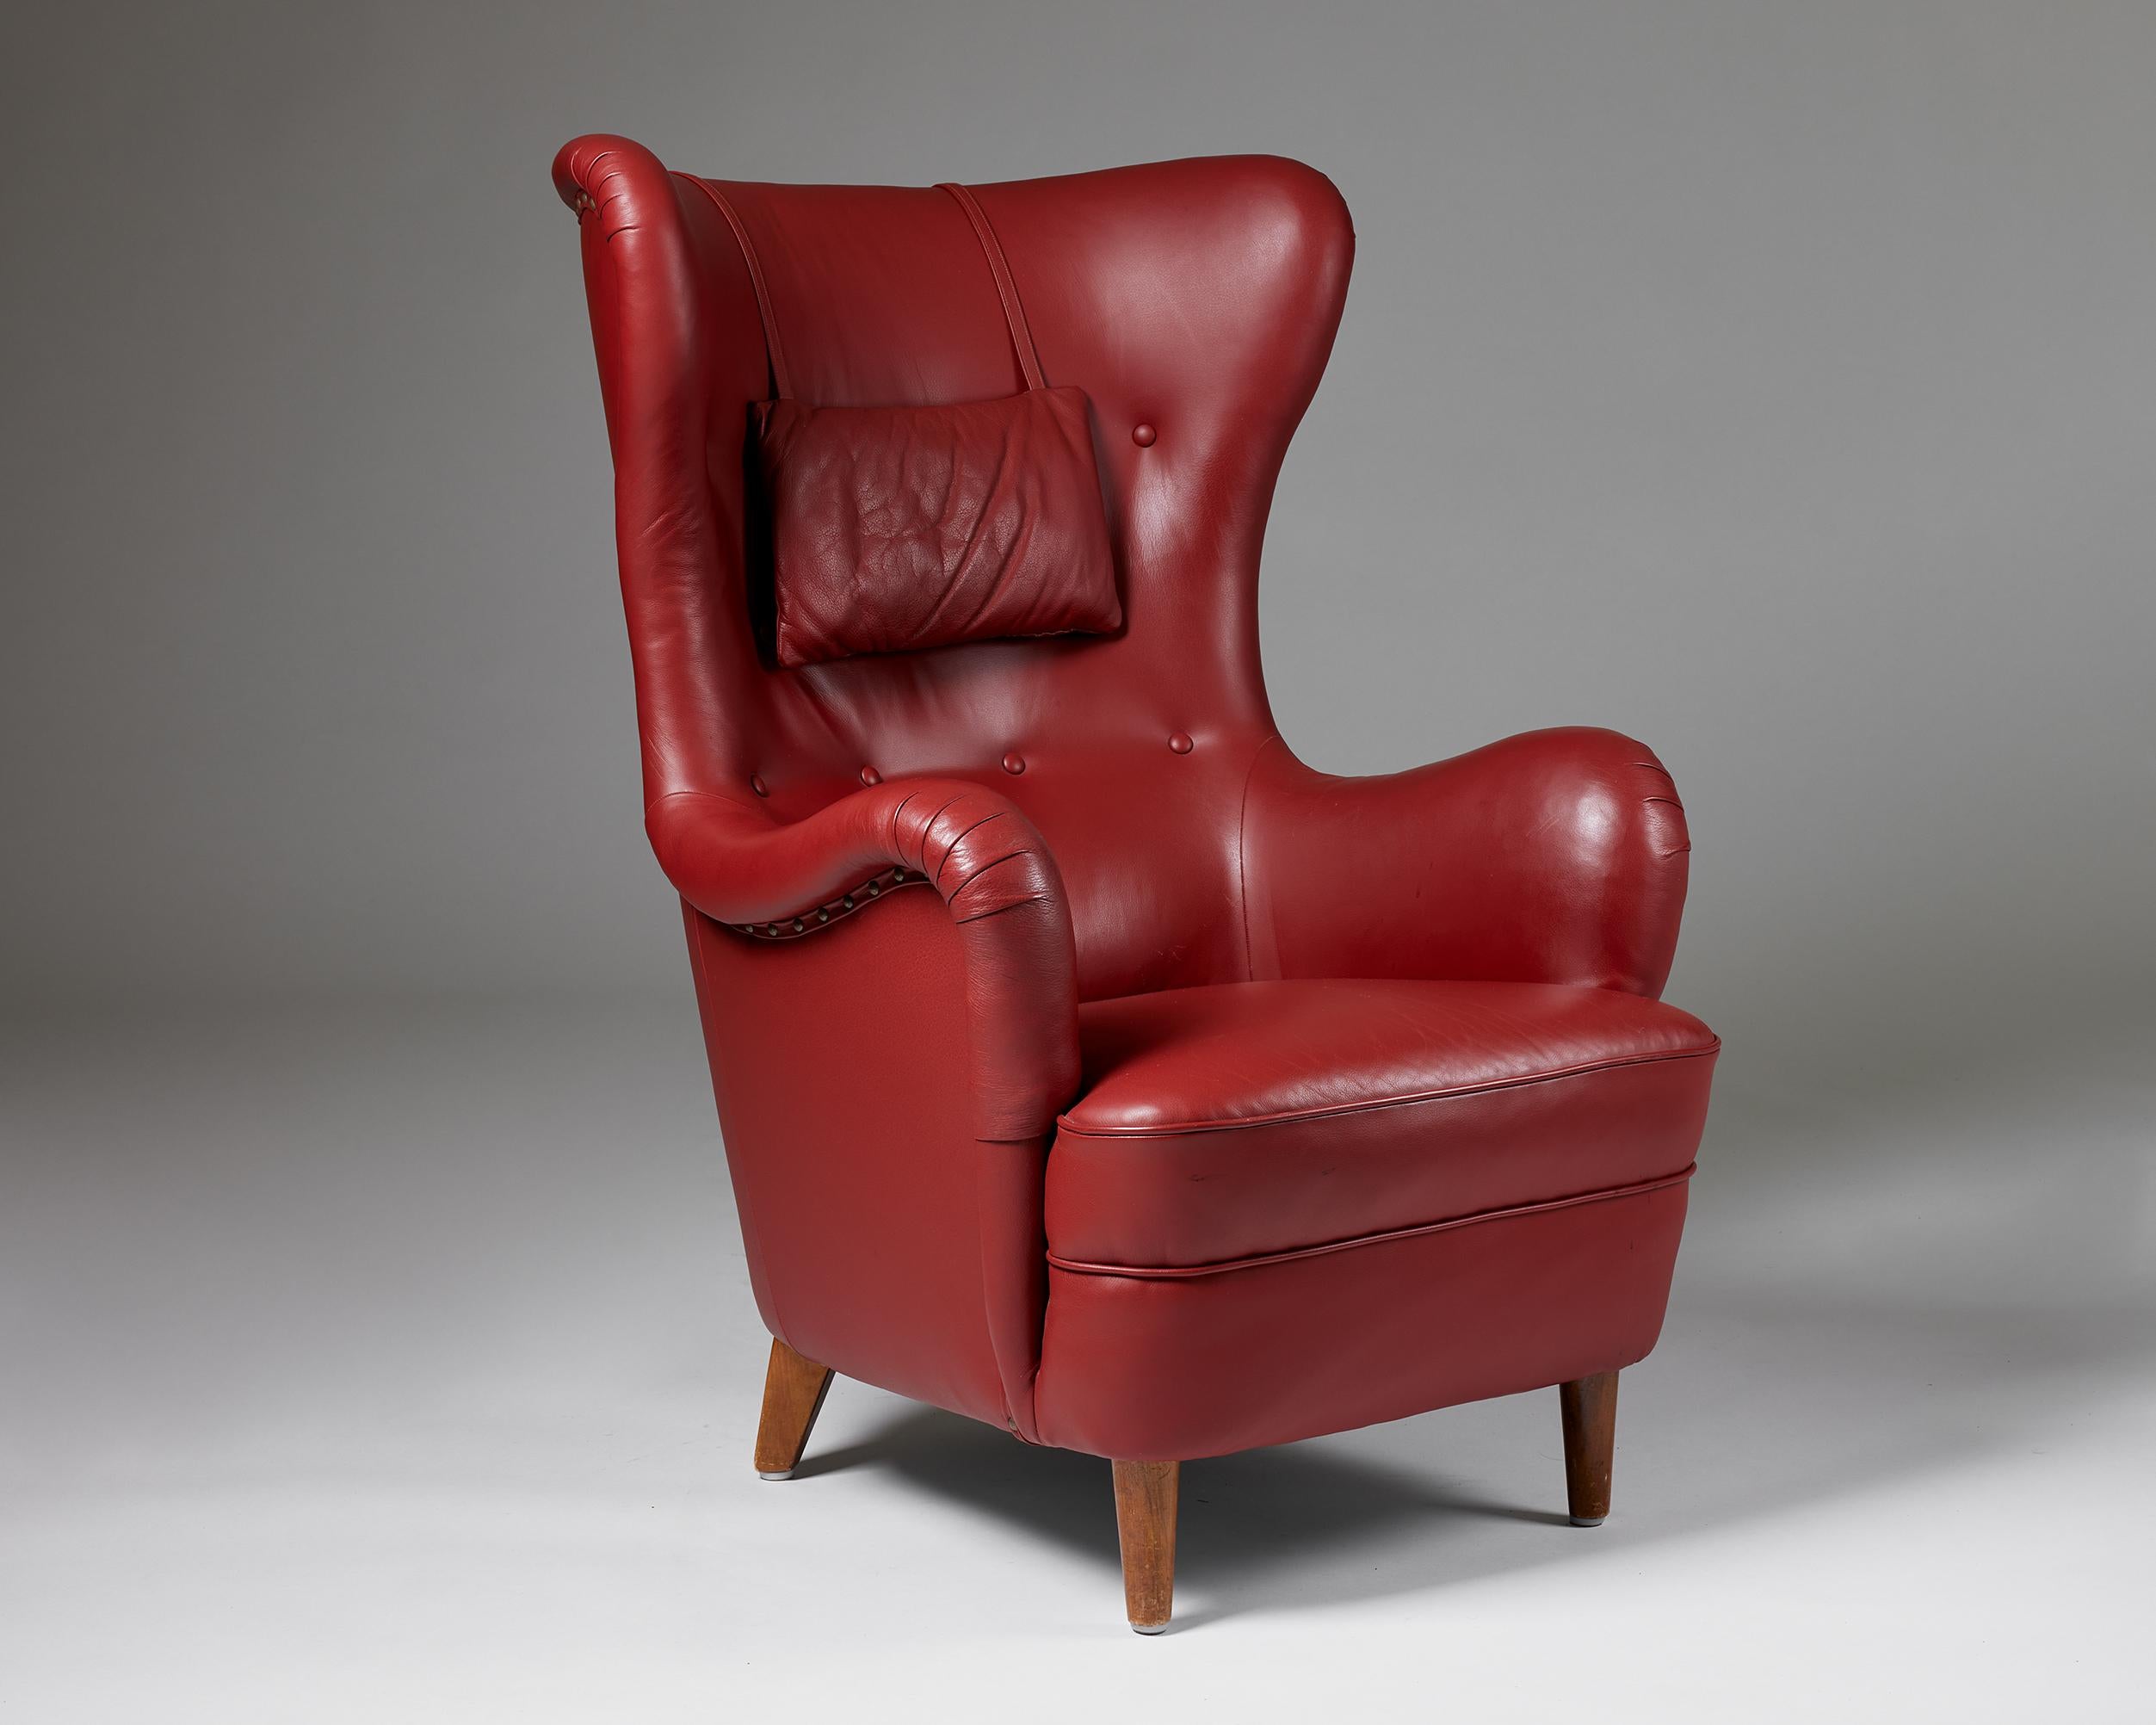 Armchair, anonymous,
Sweden, 1950s.

Leather and brass.

H: 105 cm
W: 76 cm
D: 90 cm
Seat H: 43 cm
Armrest H: 60 cm 